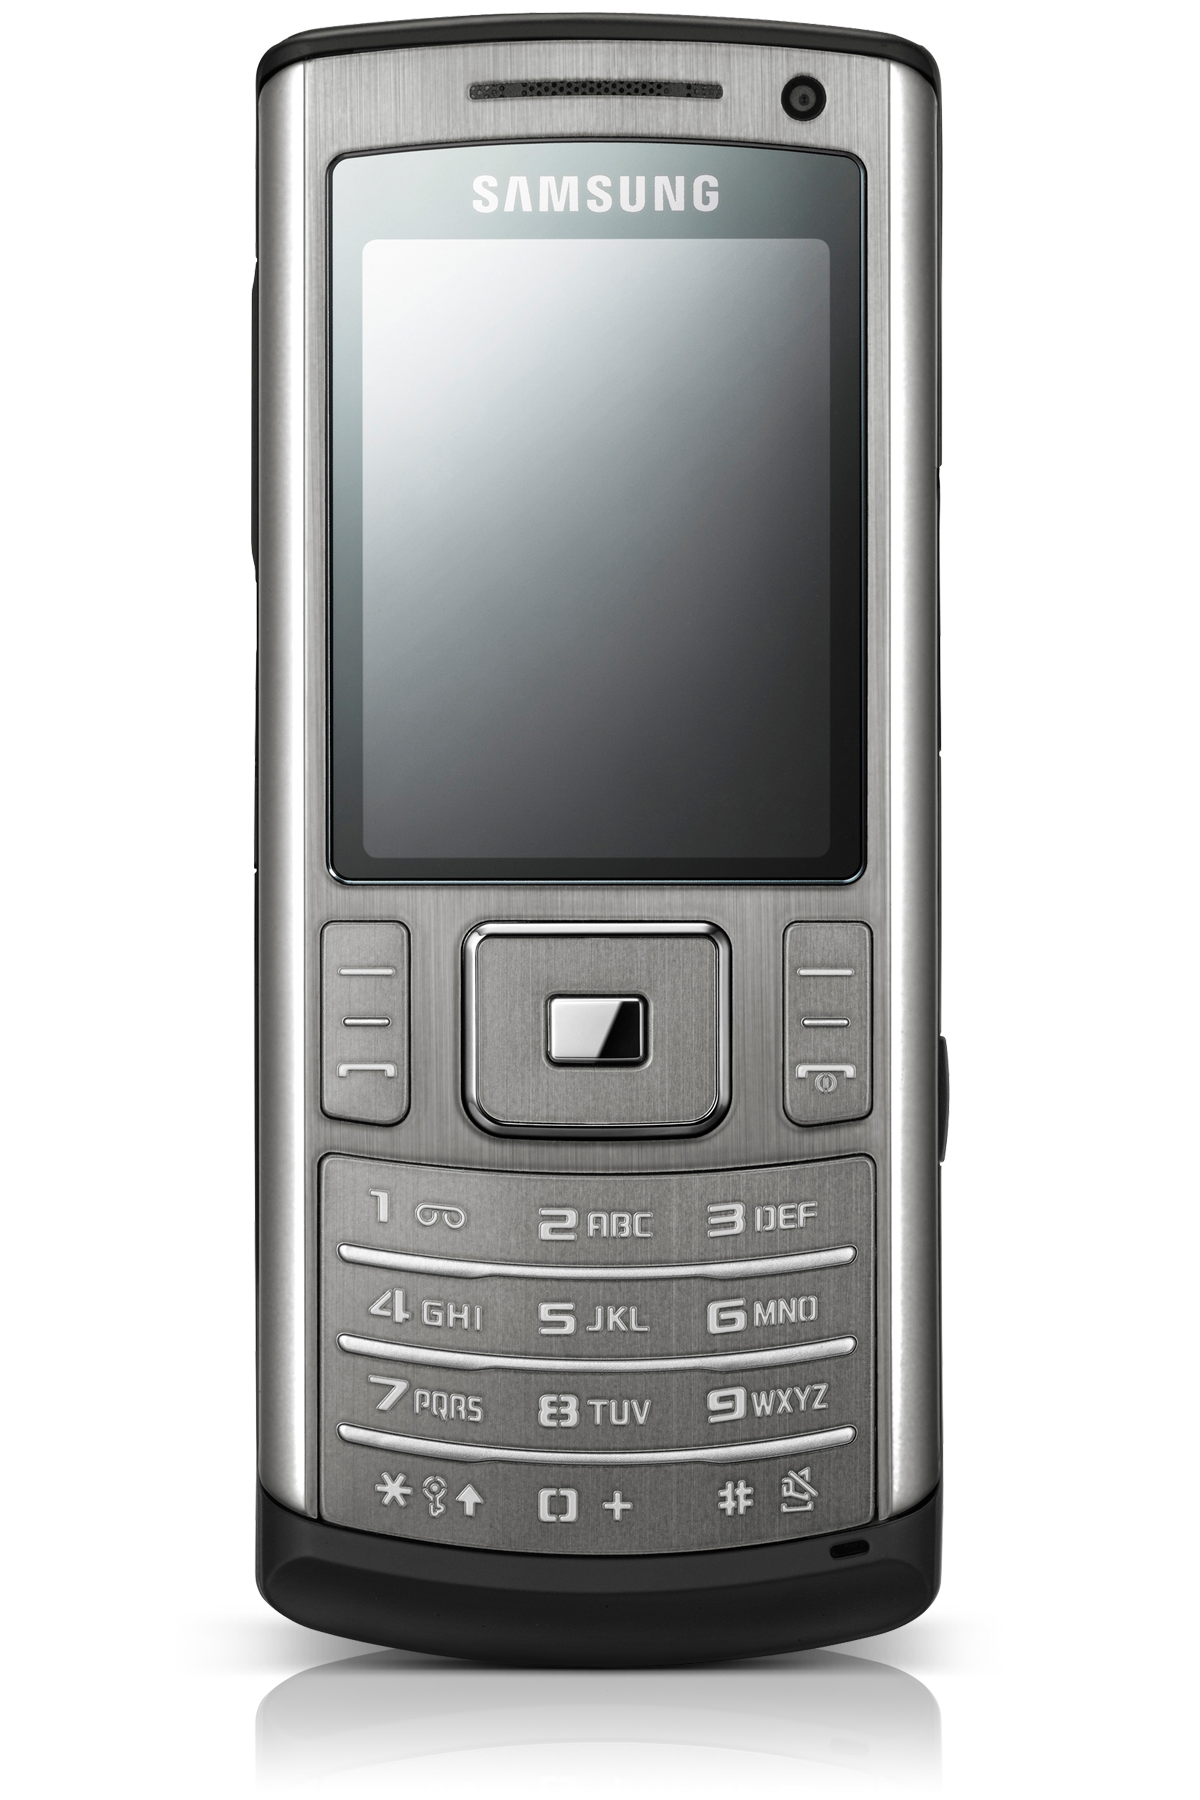 Samsung U800 | SAMSUNG Ireland1200 x 1800